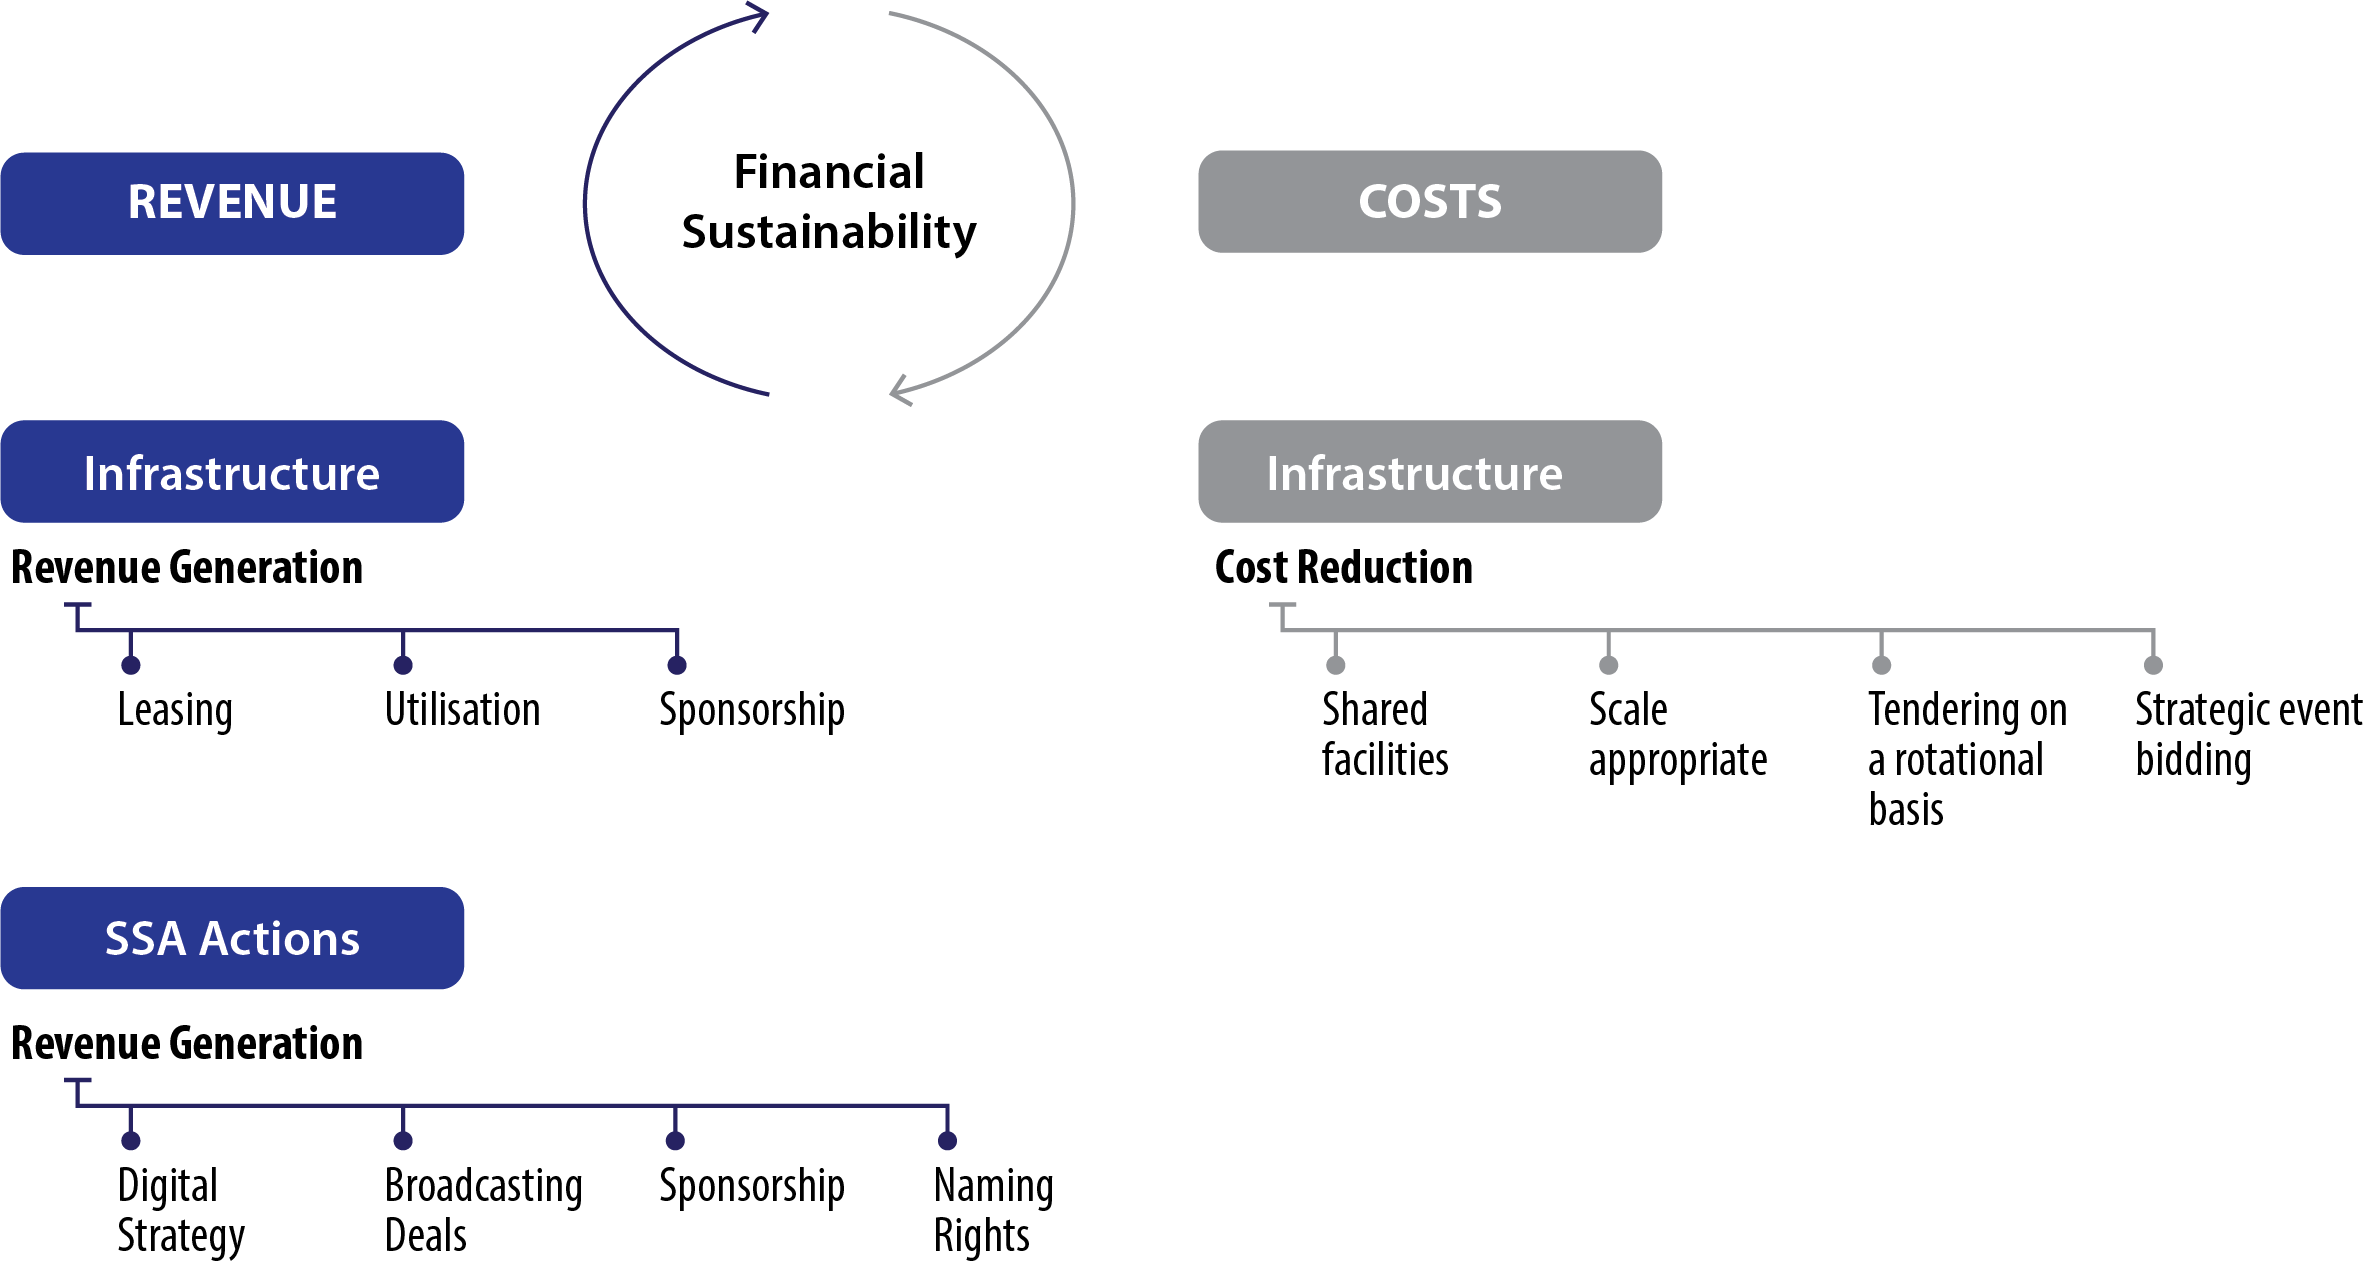 Figure 13. Financial Sustainability